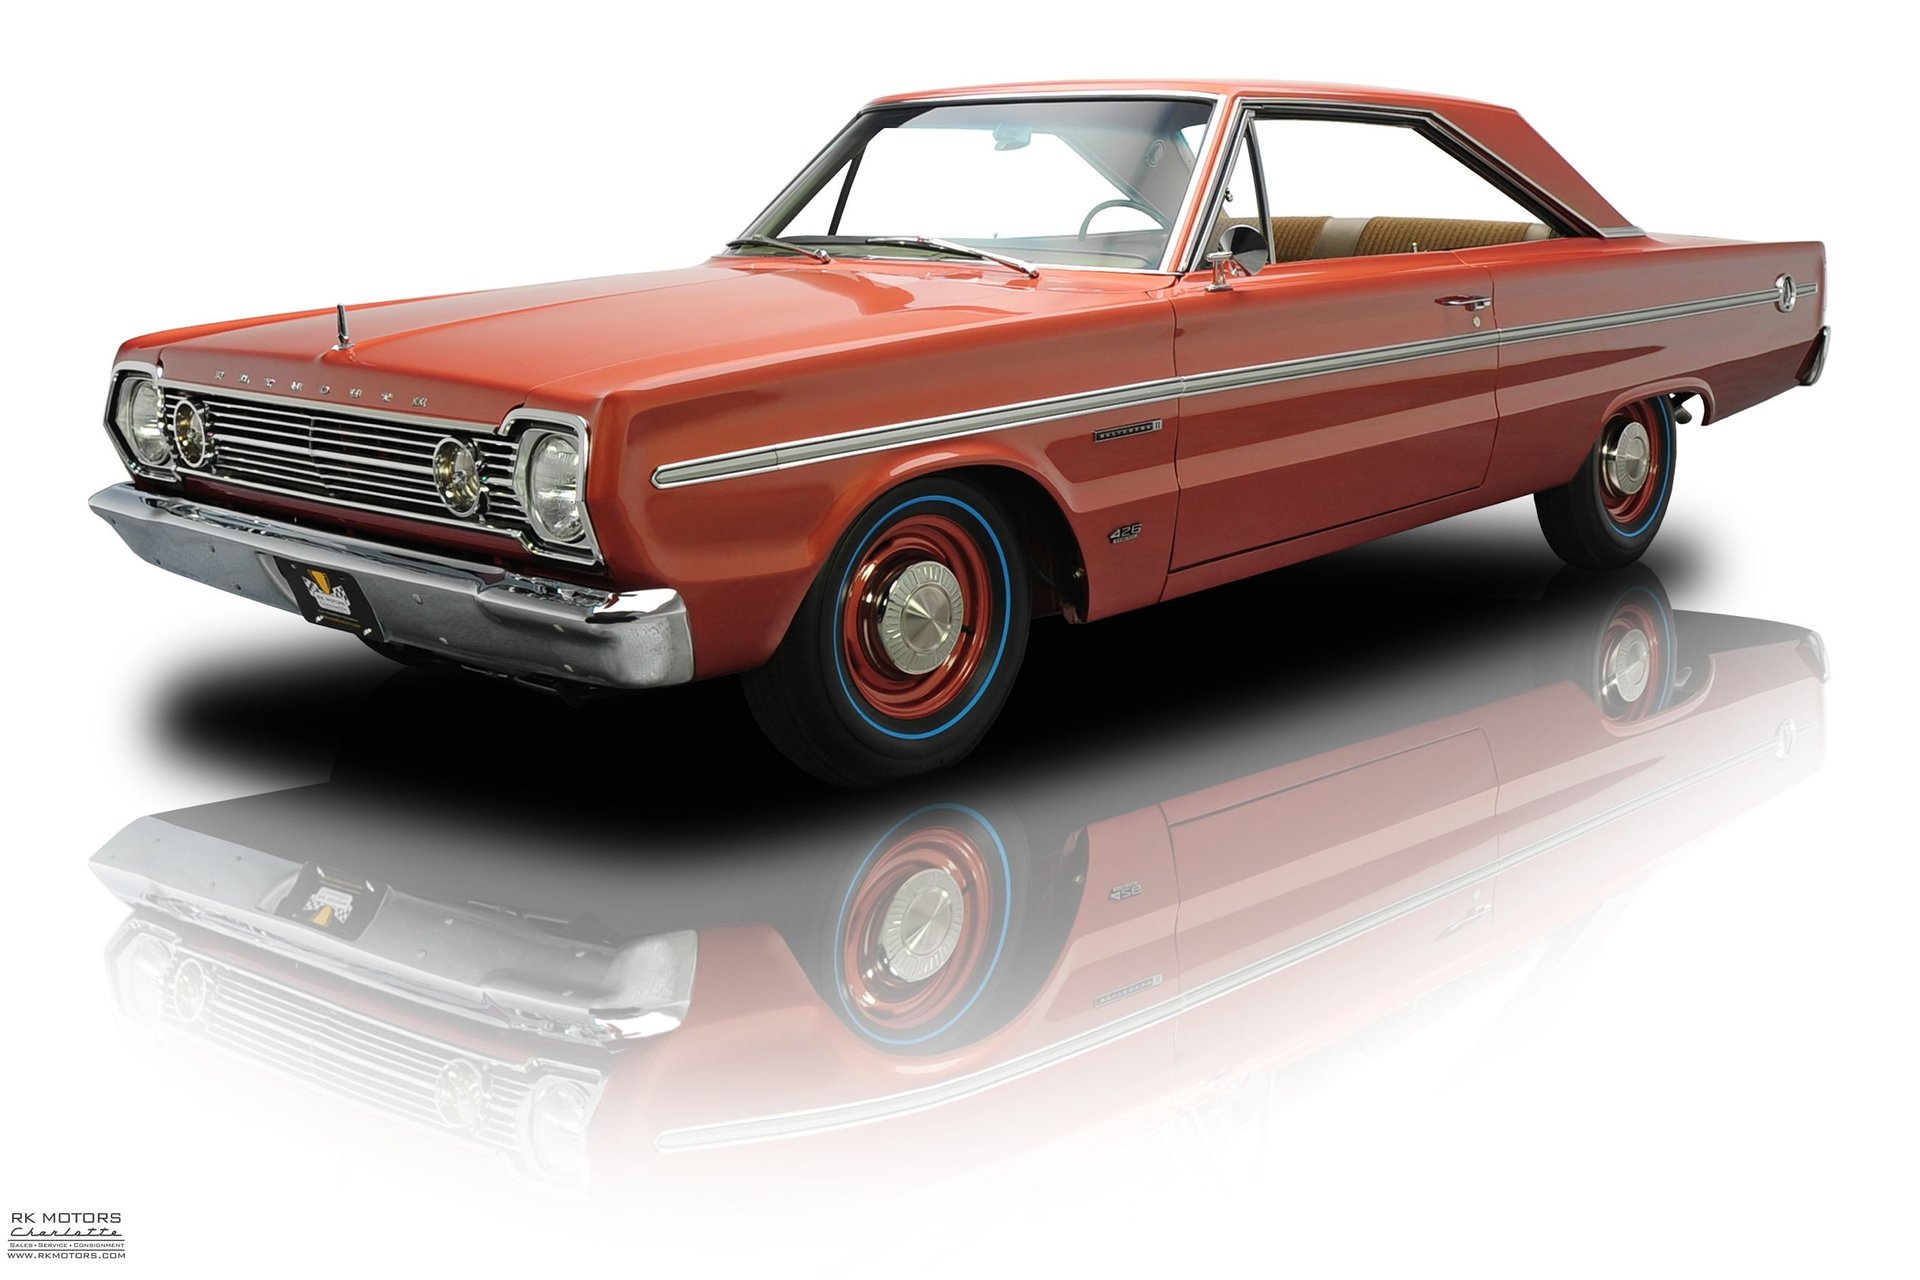 426 Hemi Powered: 1966 Plymouth Belvedere II